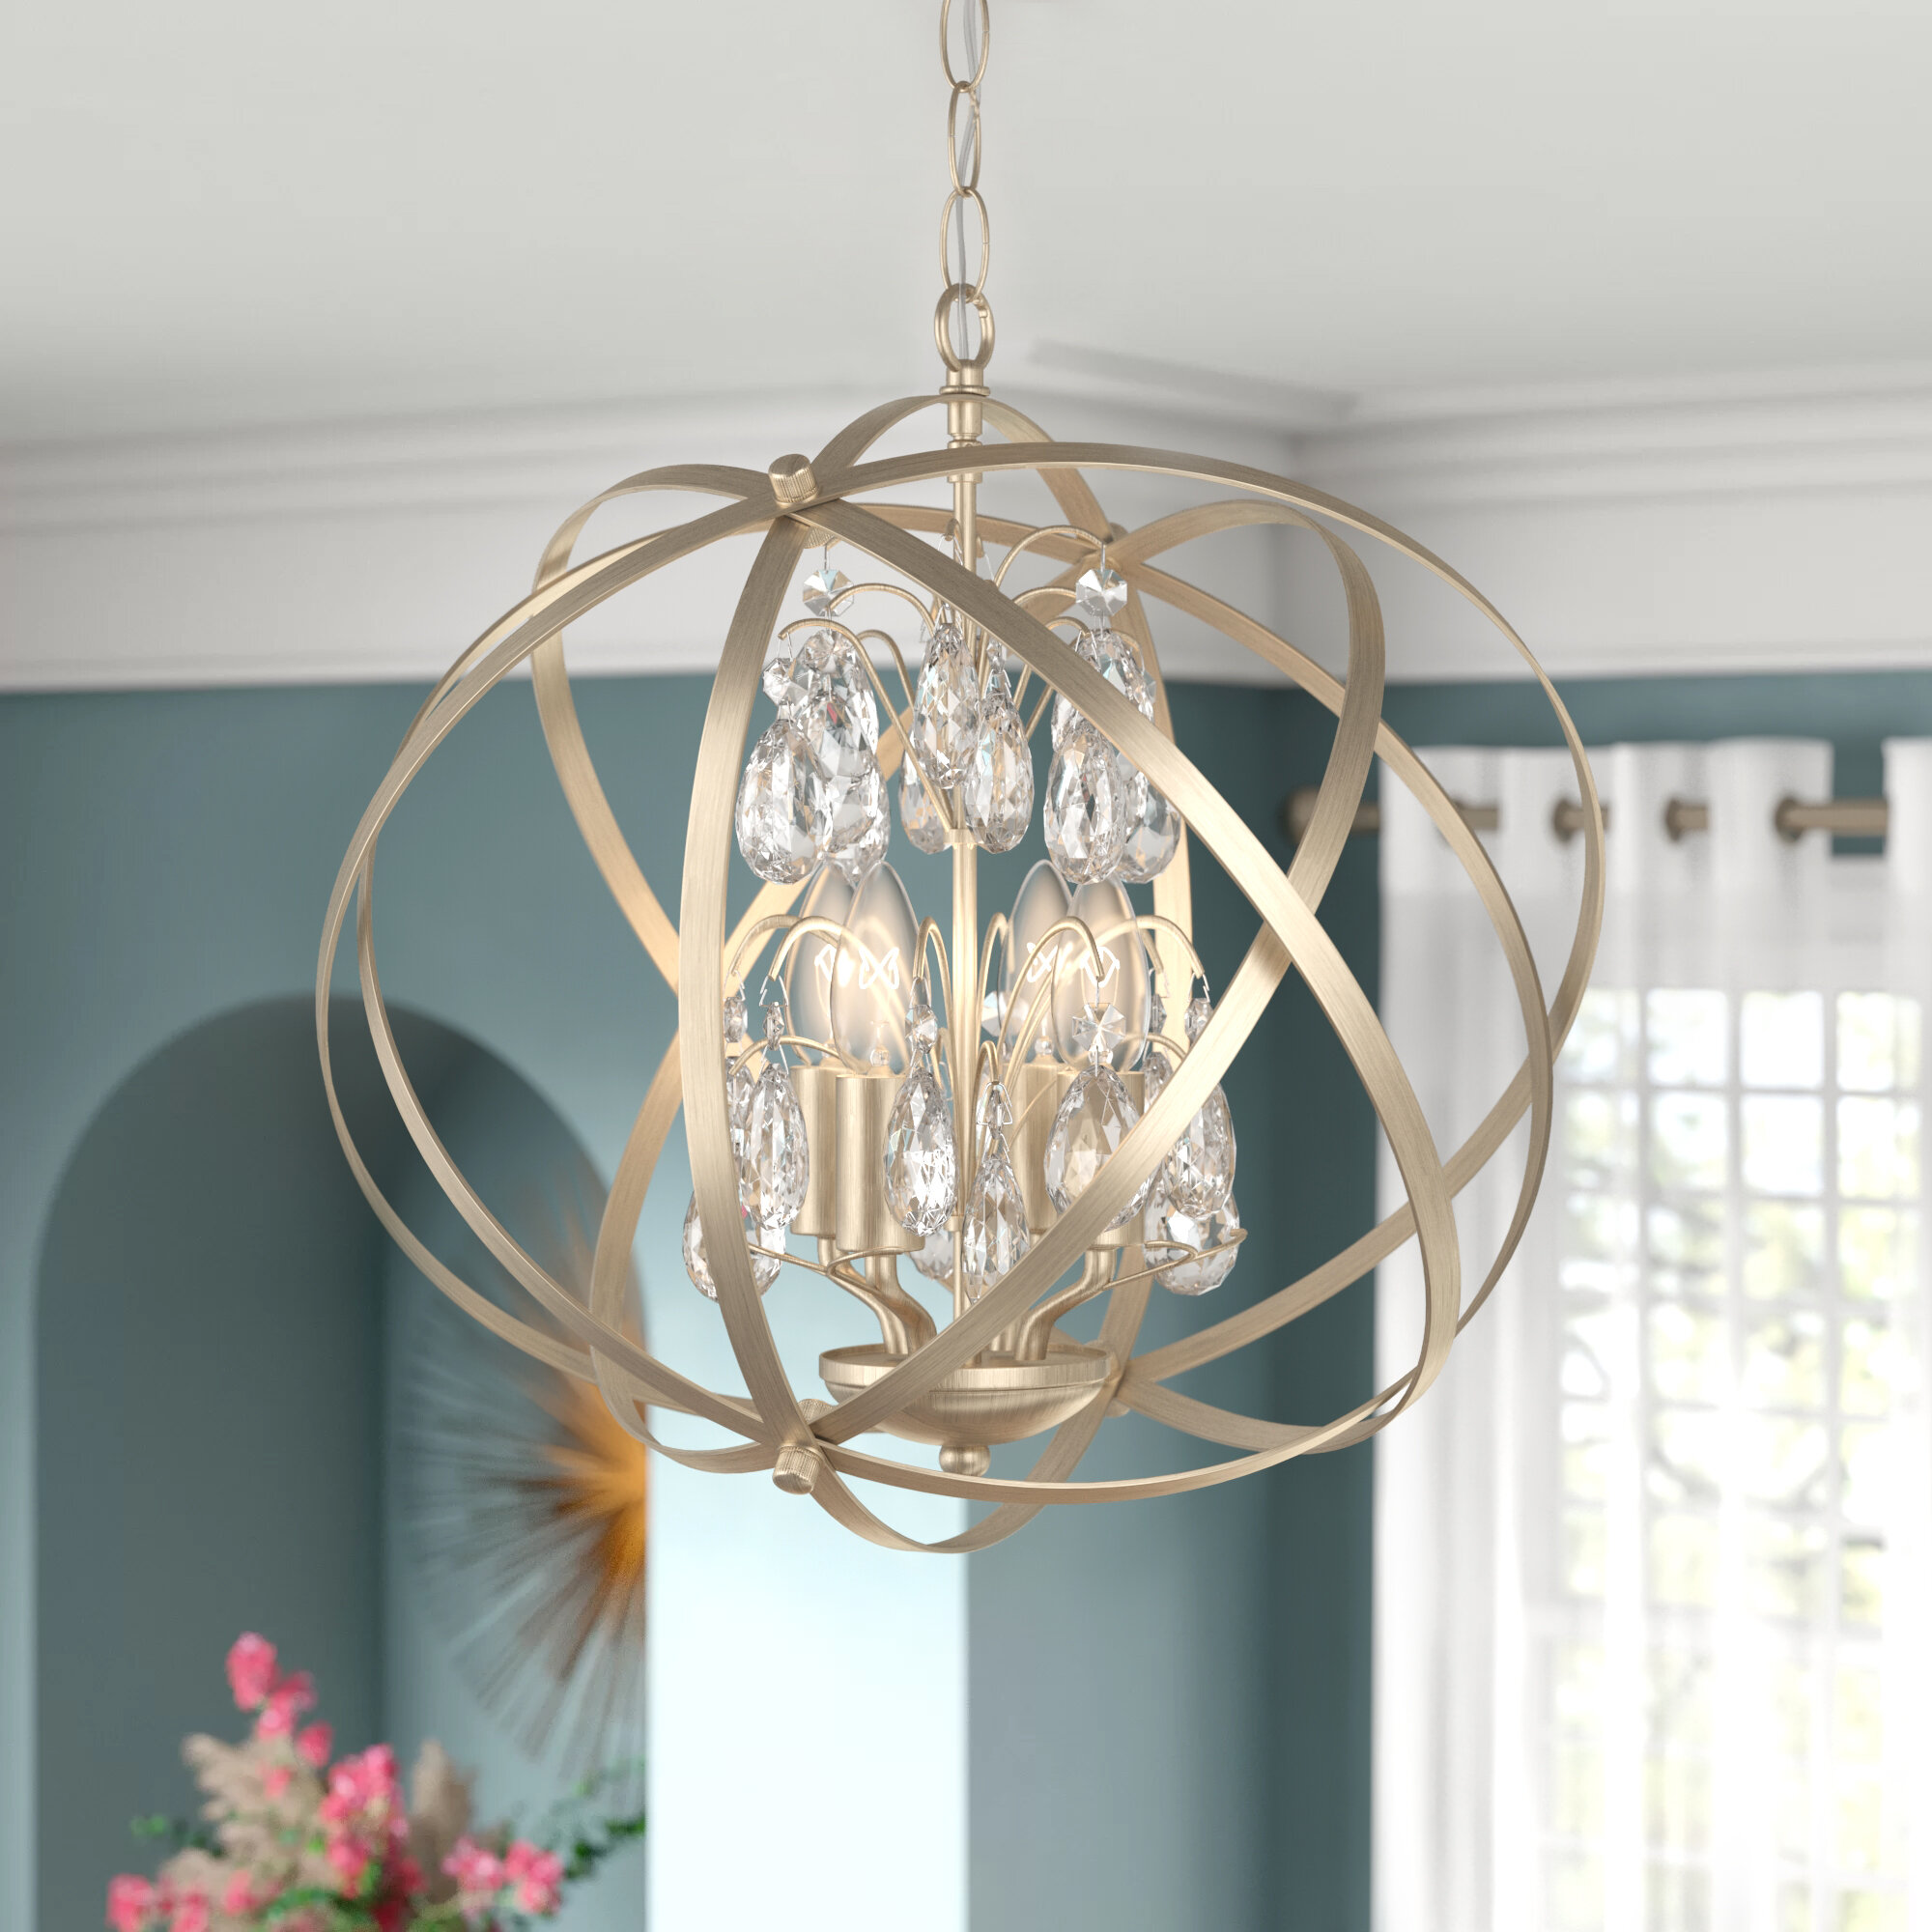 13.2 Wood Spherical Pendant Lamp Light Fixture with Metal Rings Black Finished Rustic Vintage Industrial Edison